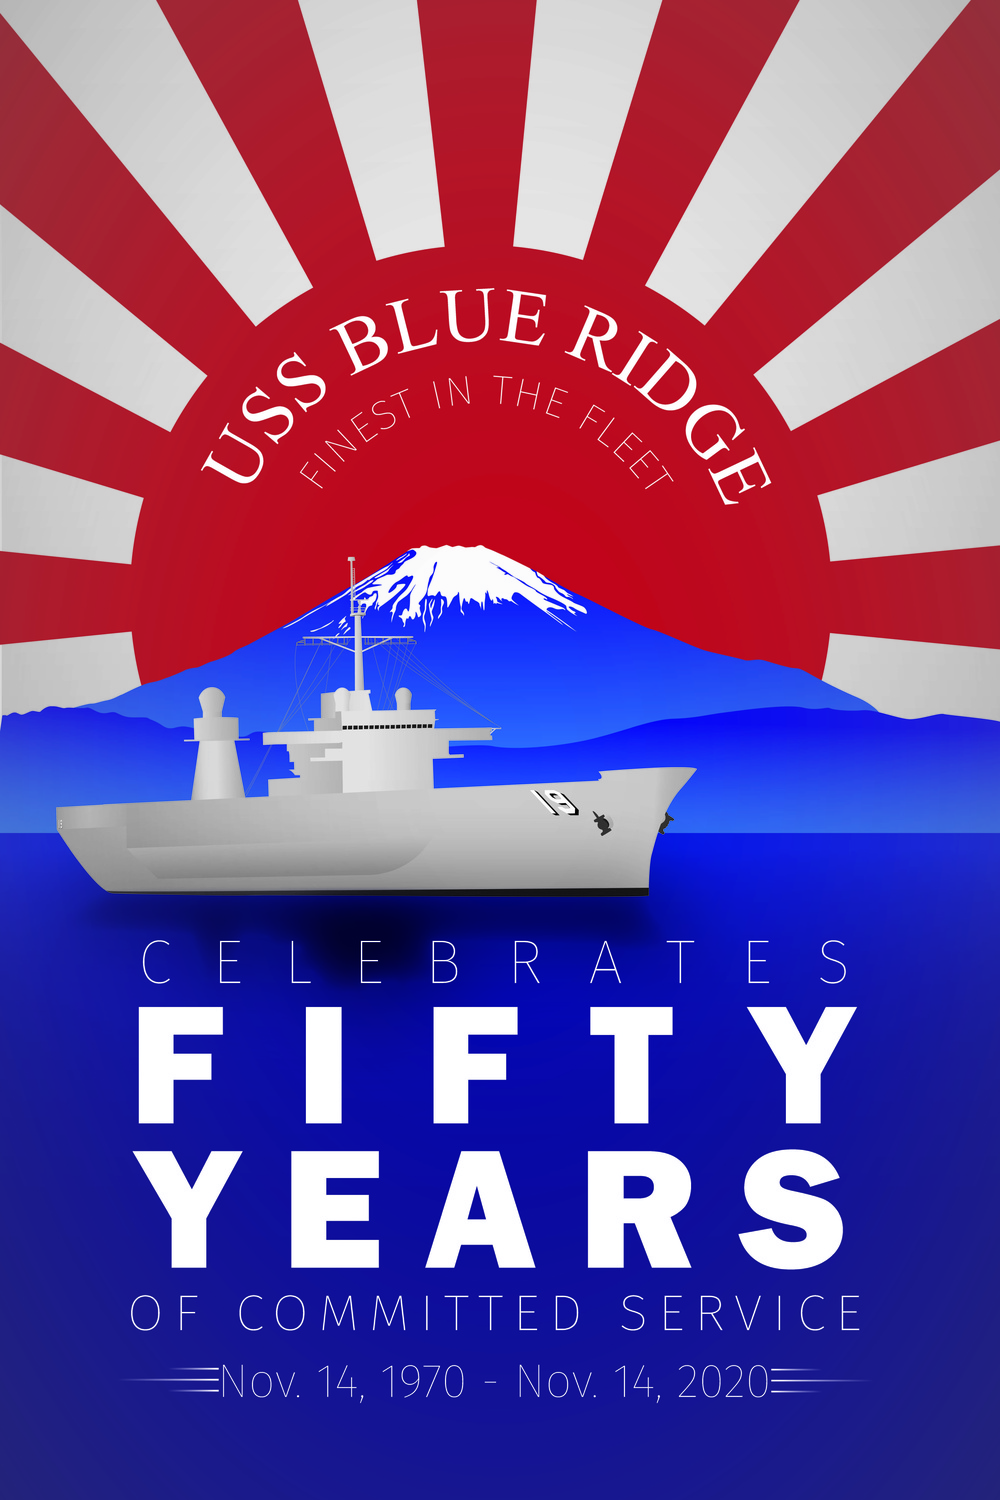 USS Blue Ridge 50th Anniversary